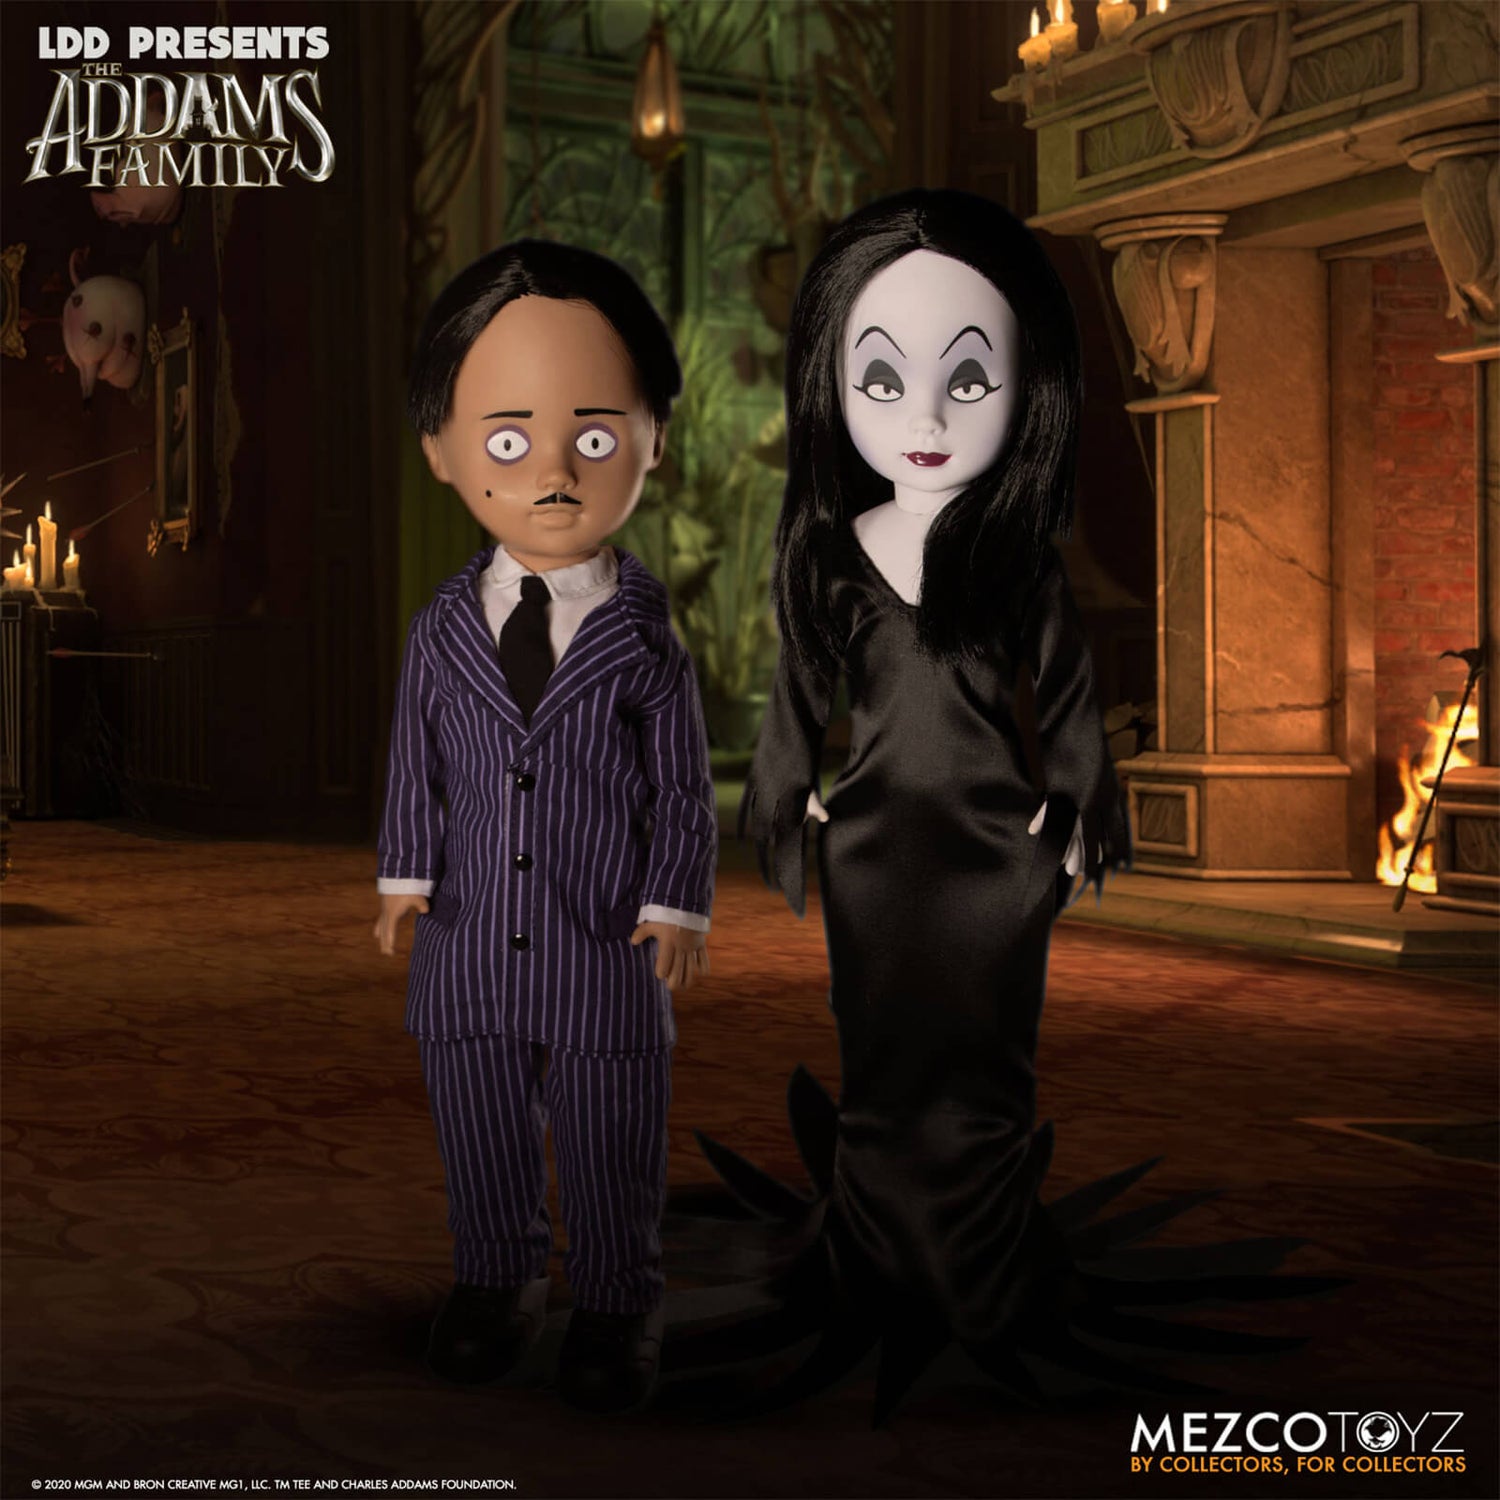 Mezco LDD Presents Addams Family Gomez and Morticia Dolls 2-Pack